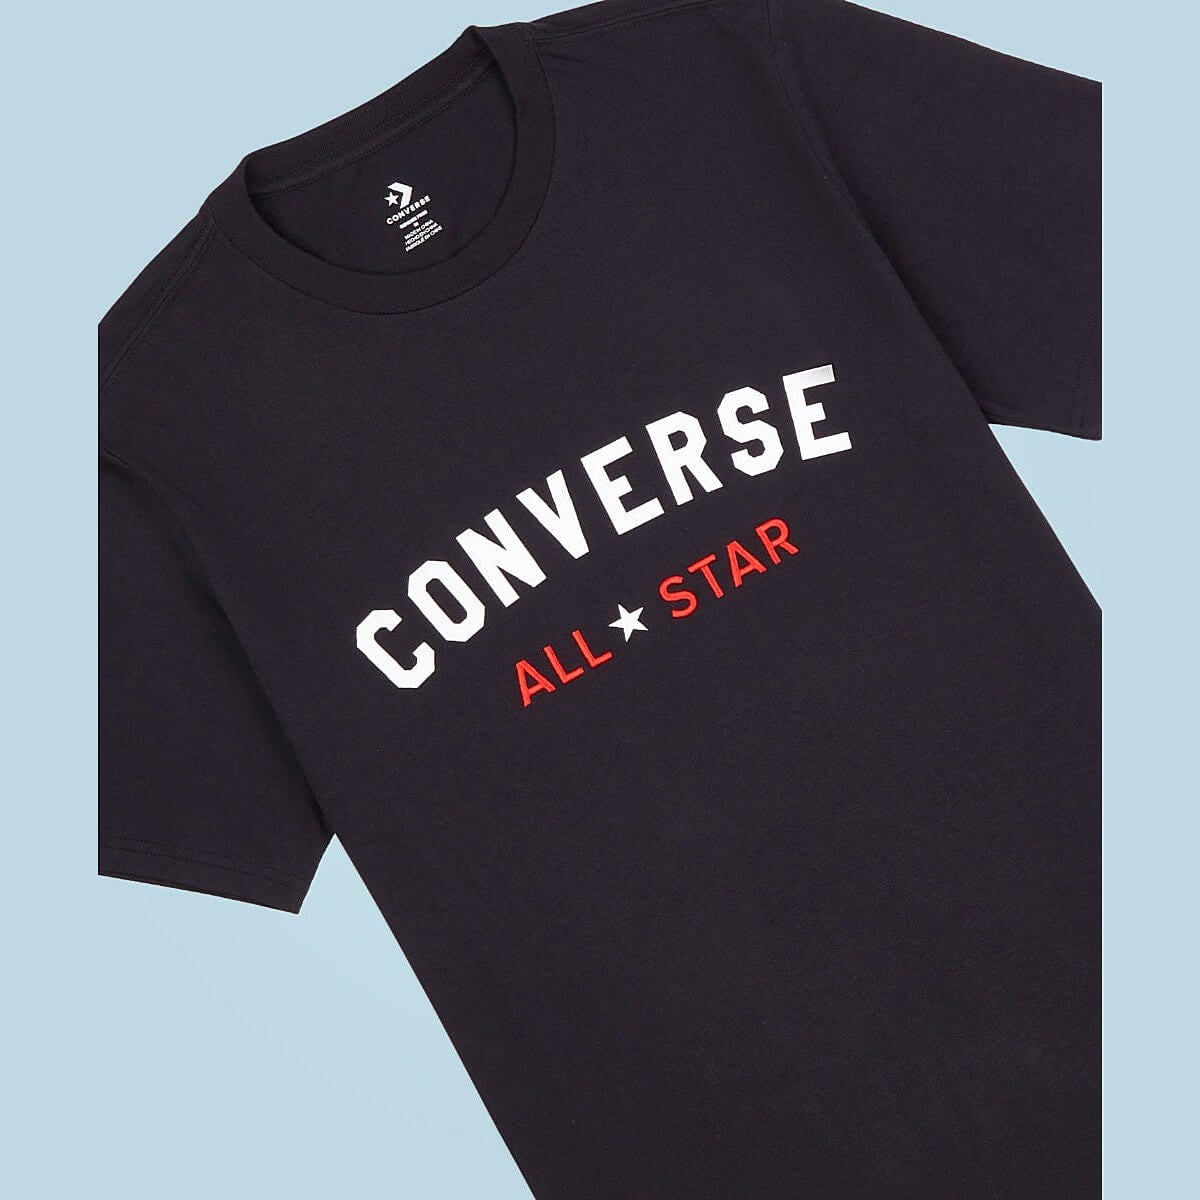 Converse STANDARD FIT ALL STAR LOGO Black